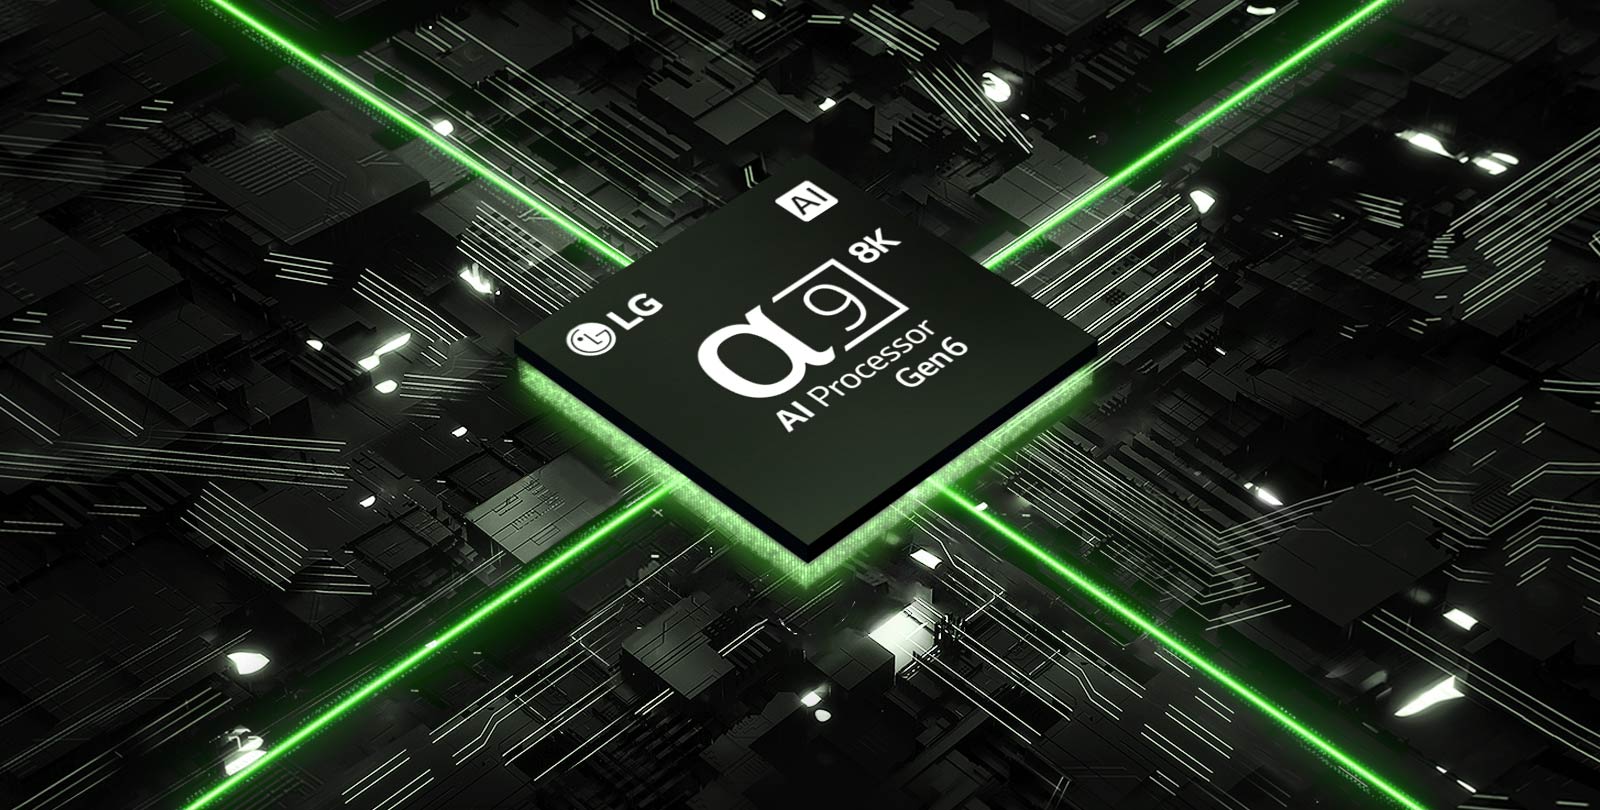 α9第六代 8K AI影音處理晶片緊靠著電路板的影片。電路板亮起，且晶片發出象徵其威力的綠光。